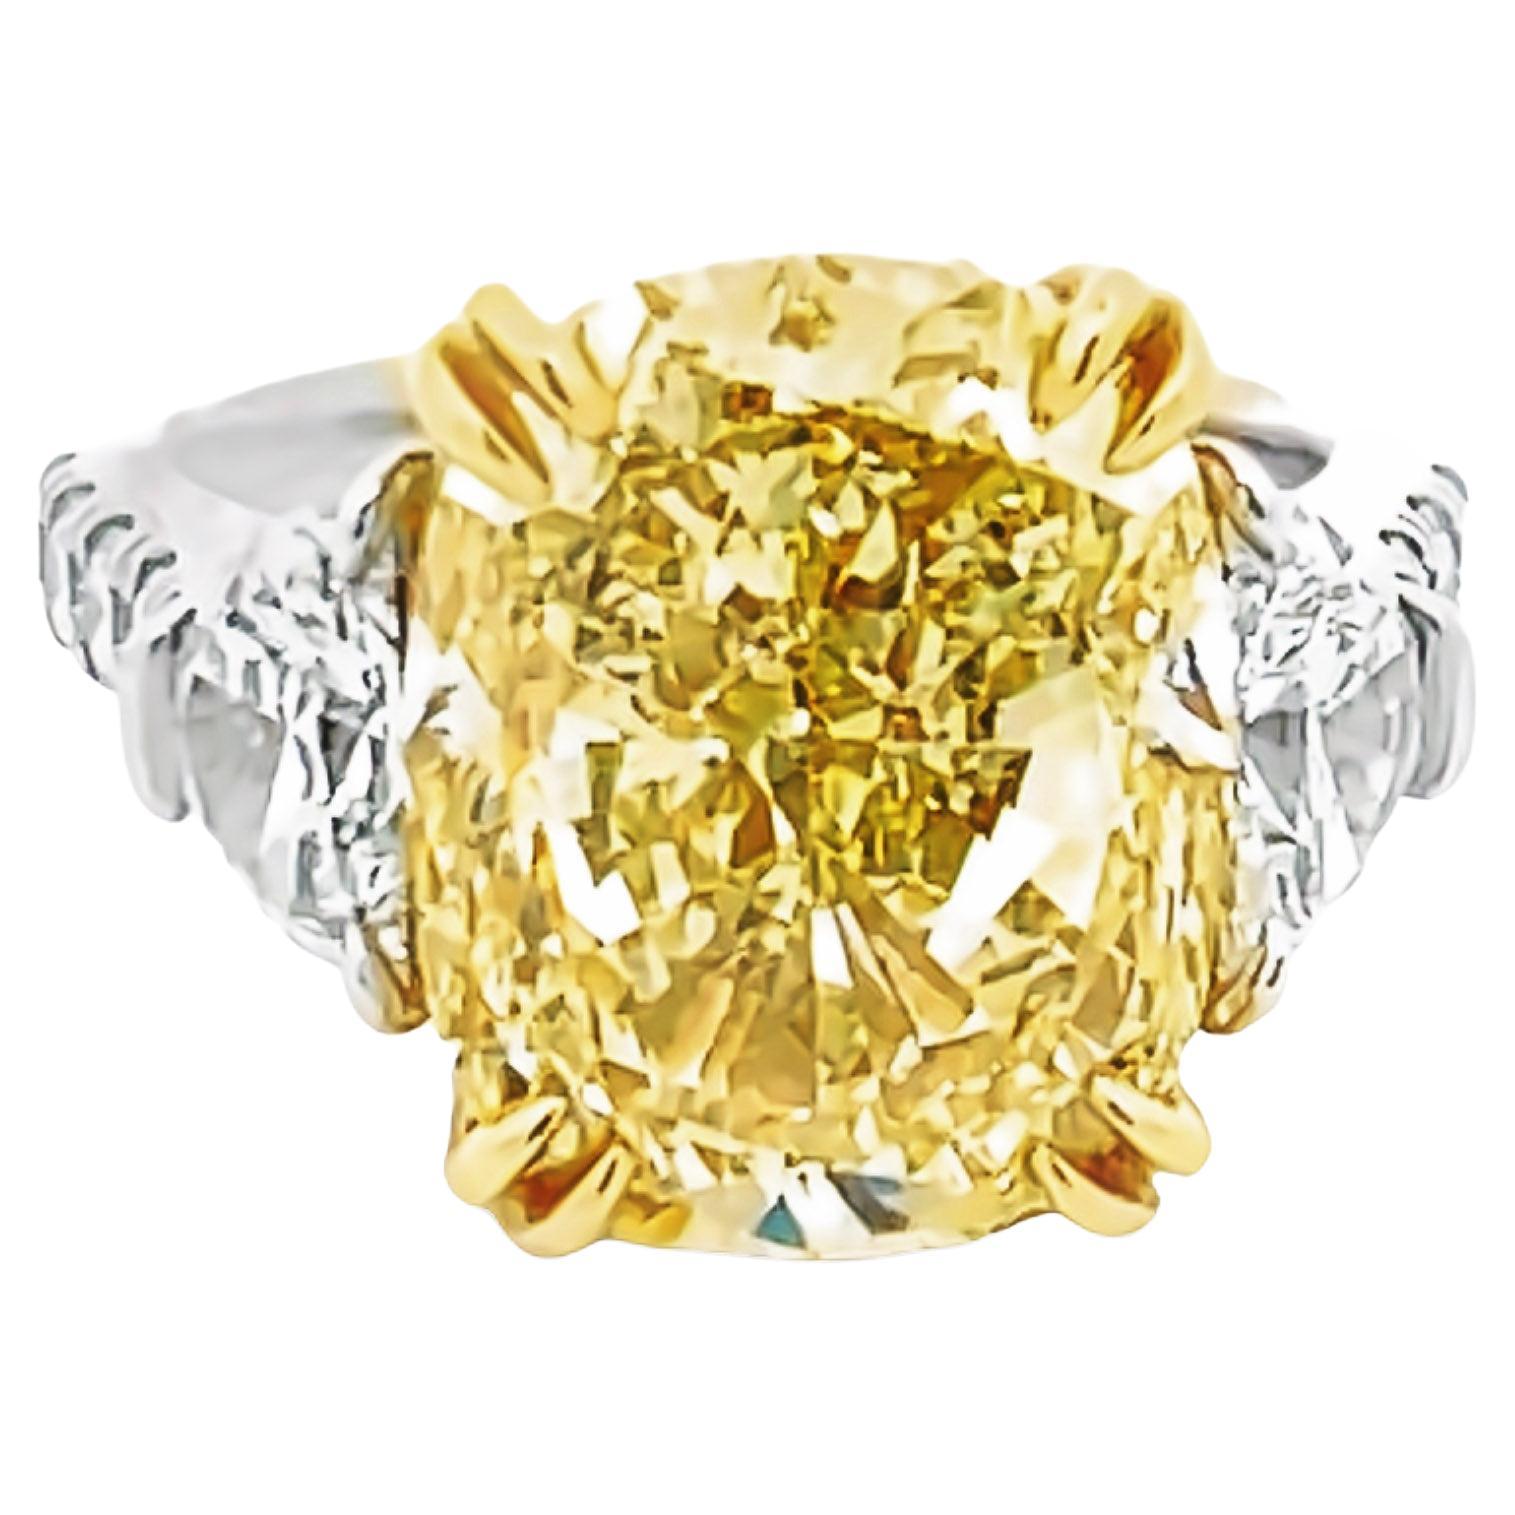 GIA Certified 10.71 Carat Fancy Yellow Diamond Engagement Ring